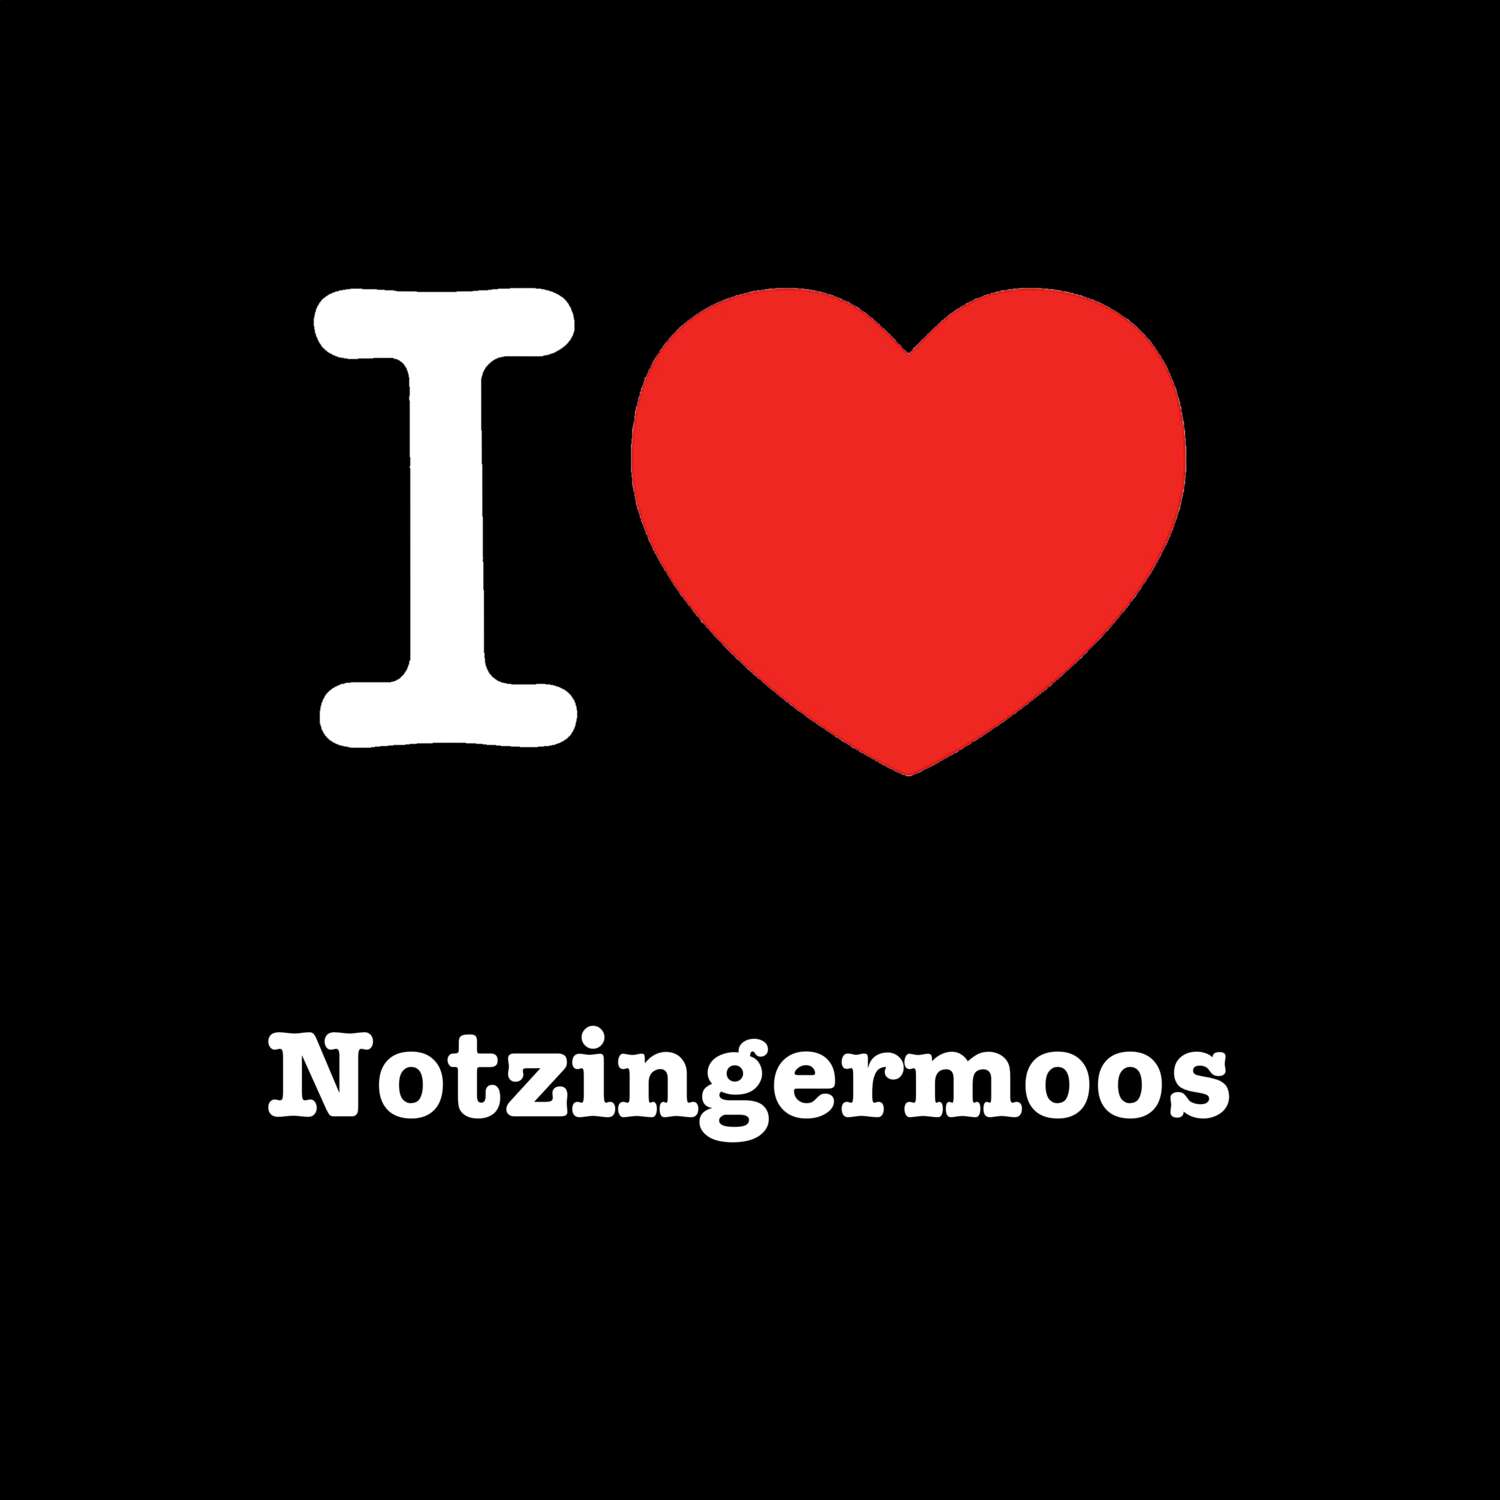 Notzingermoos T-Shirt »I love«